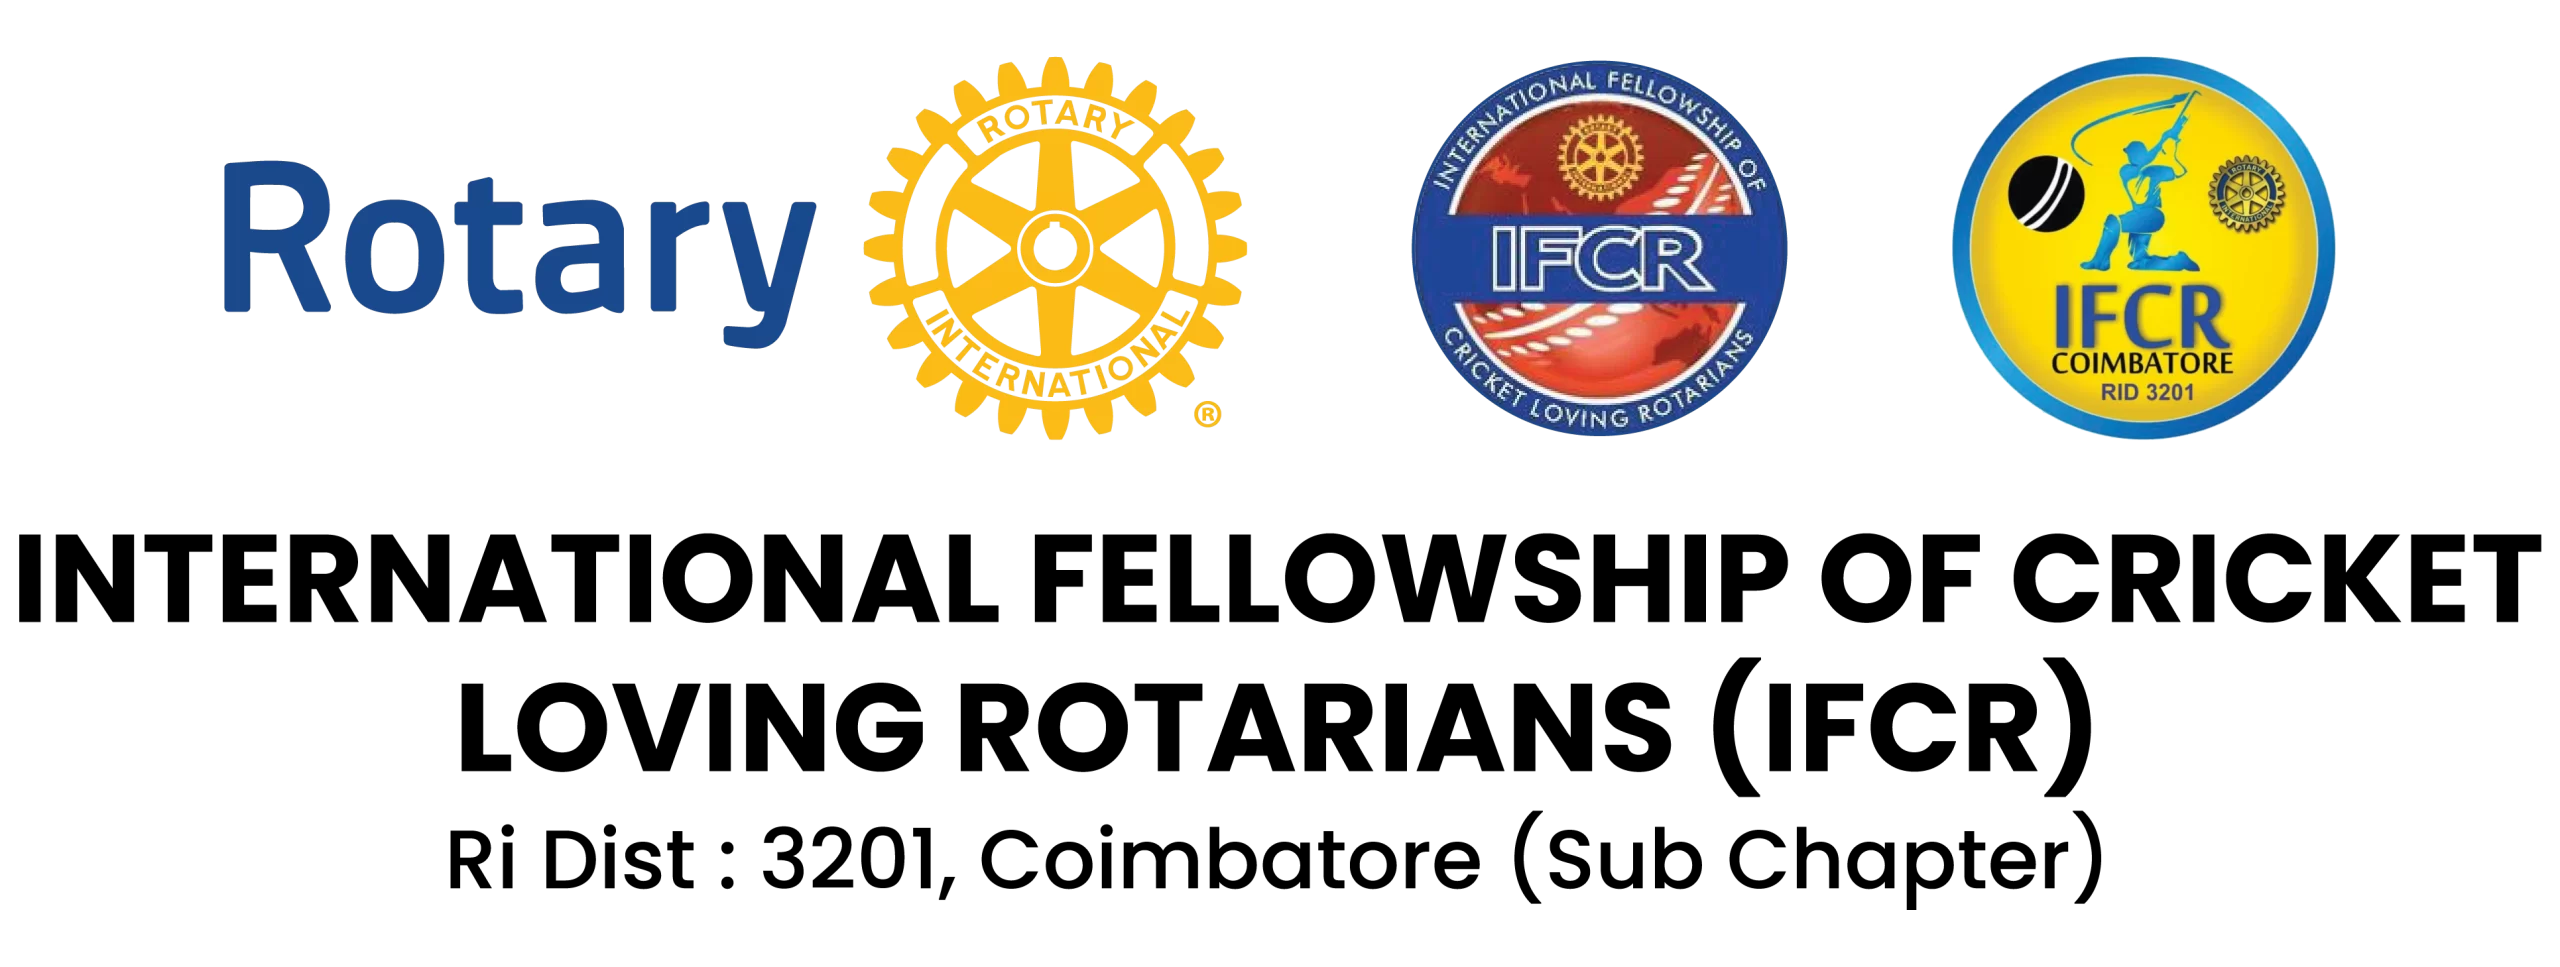 International Fellowship of Cricket Loving Rotarians